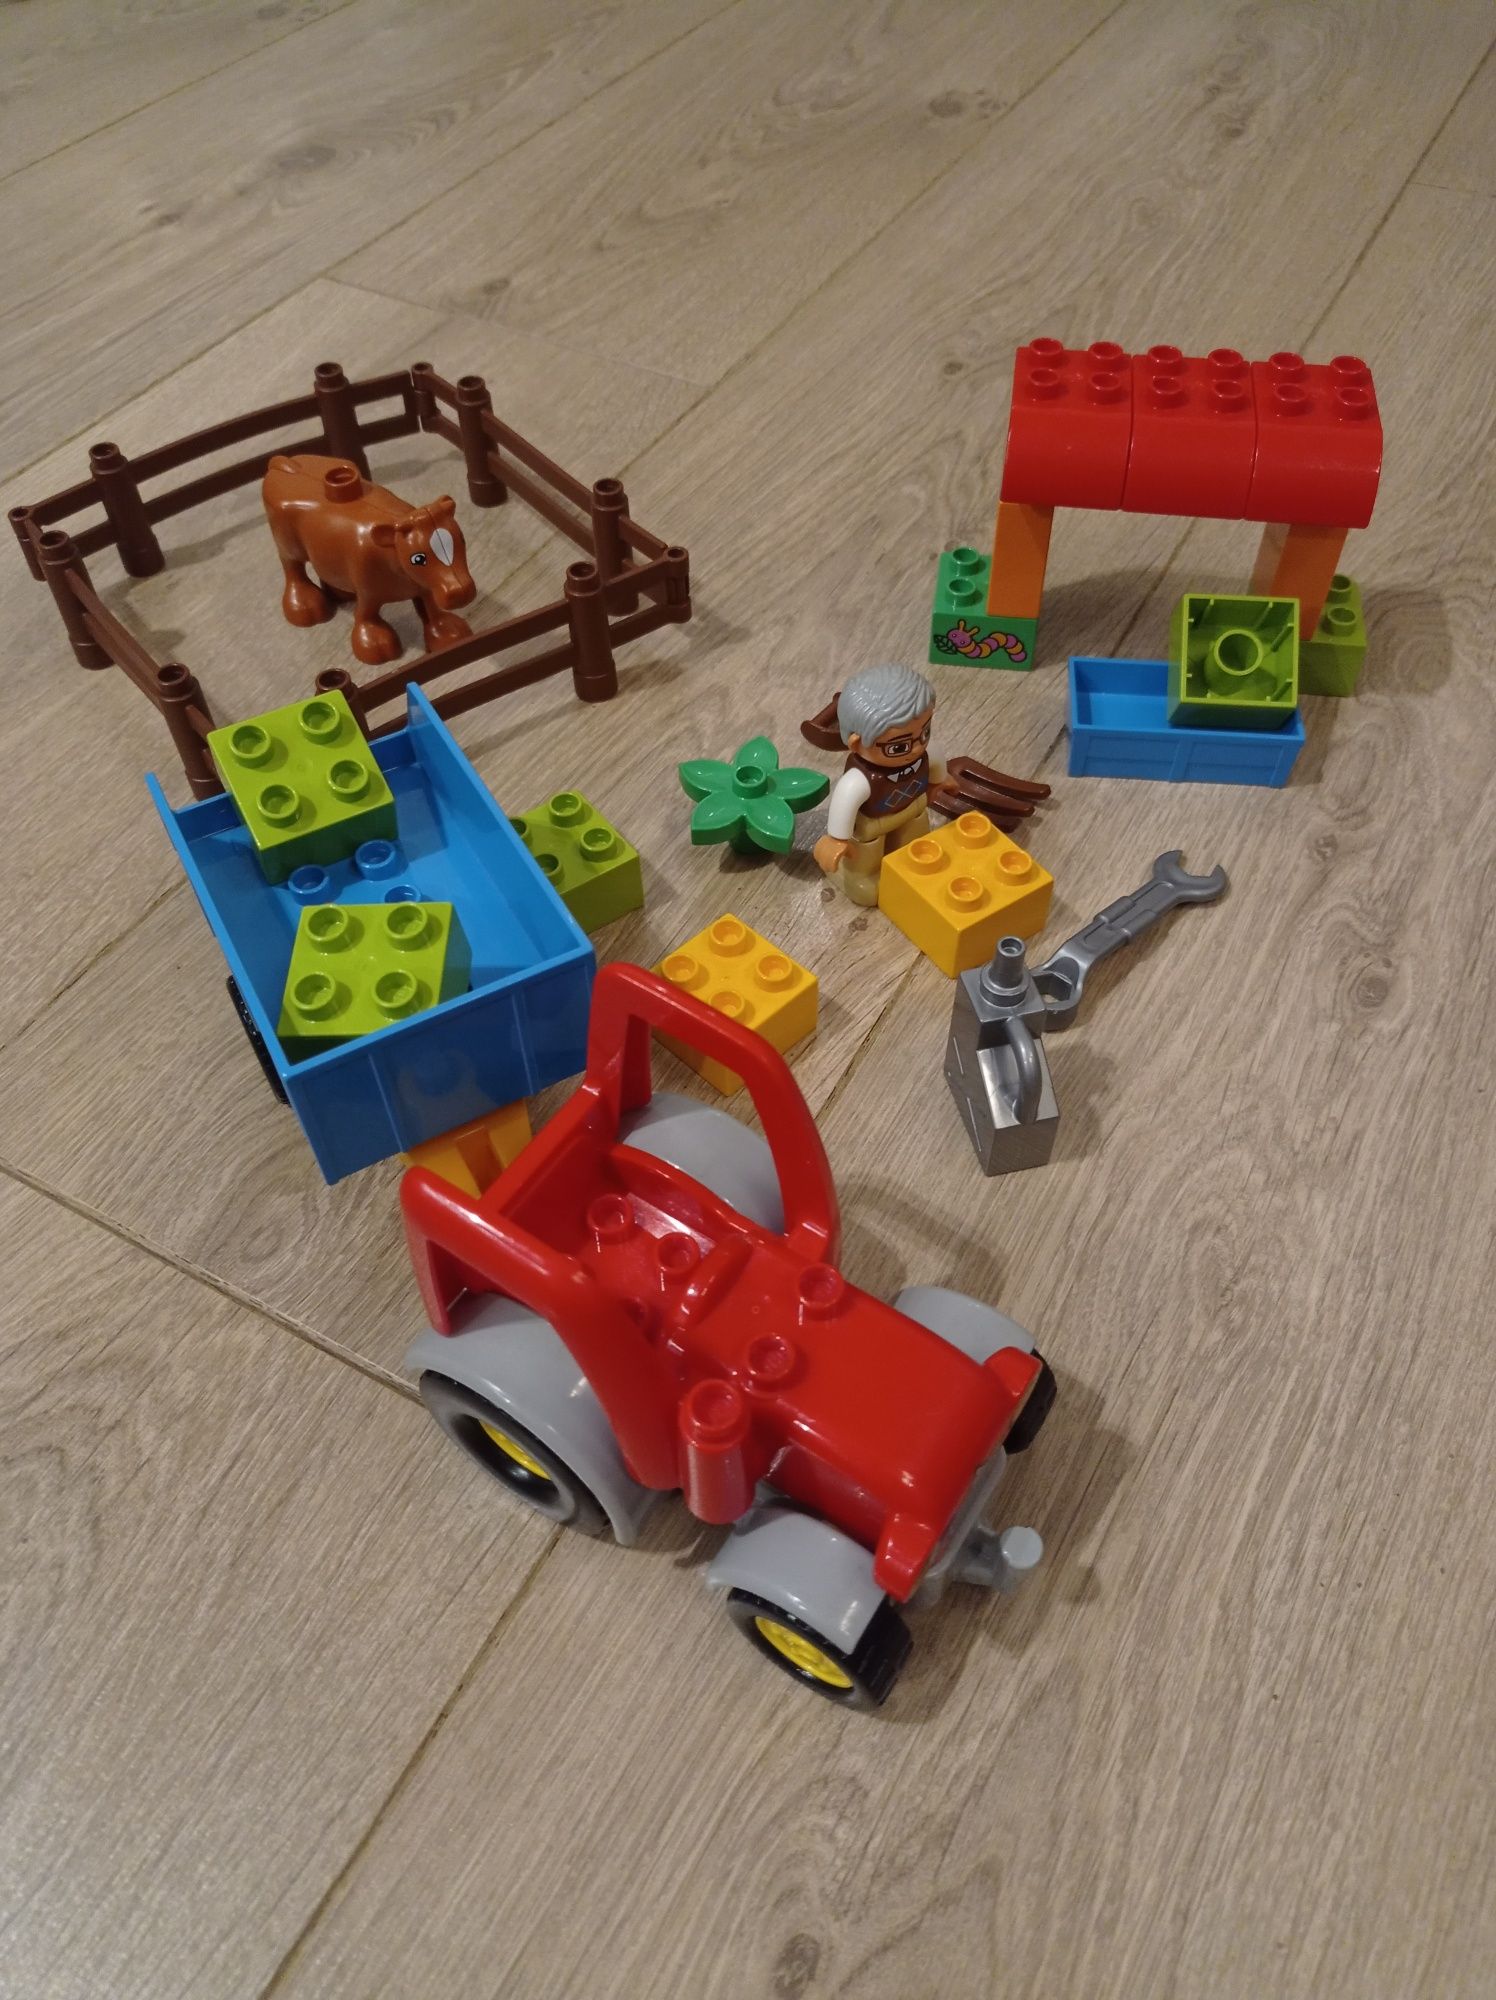 LEGO Duplo 10524 Traktor